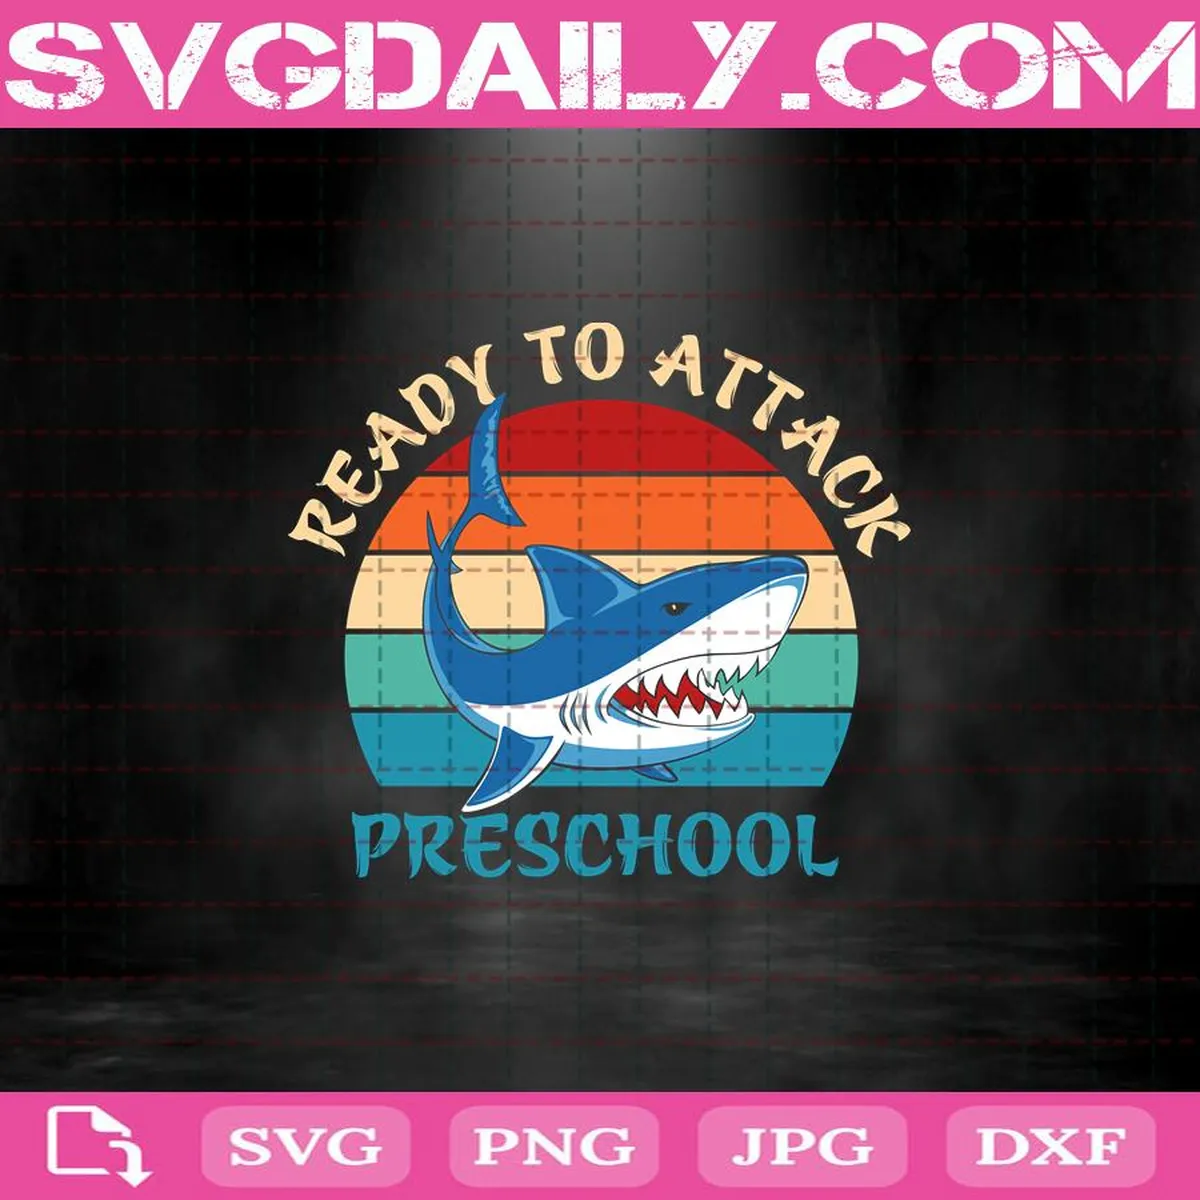 Ready To Attack Preschool Svg, Preschool Svg, Shark Preschool Svg, Shark Back To School Svg, Back To School Svg